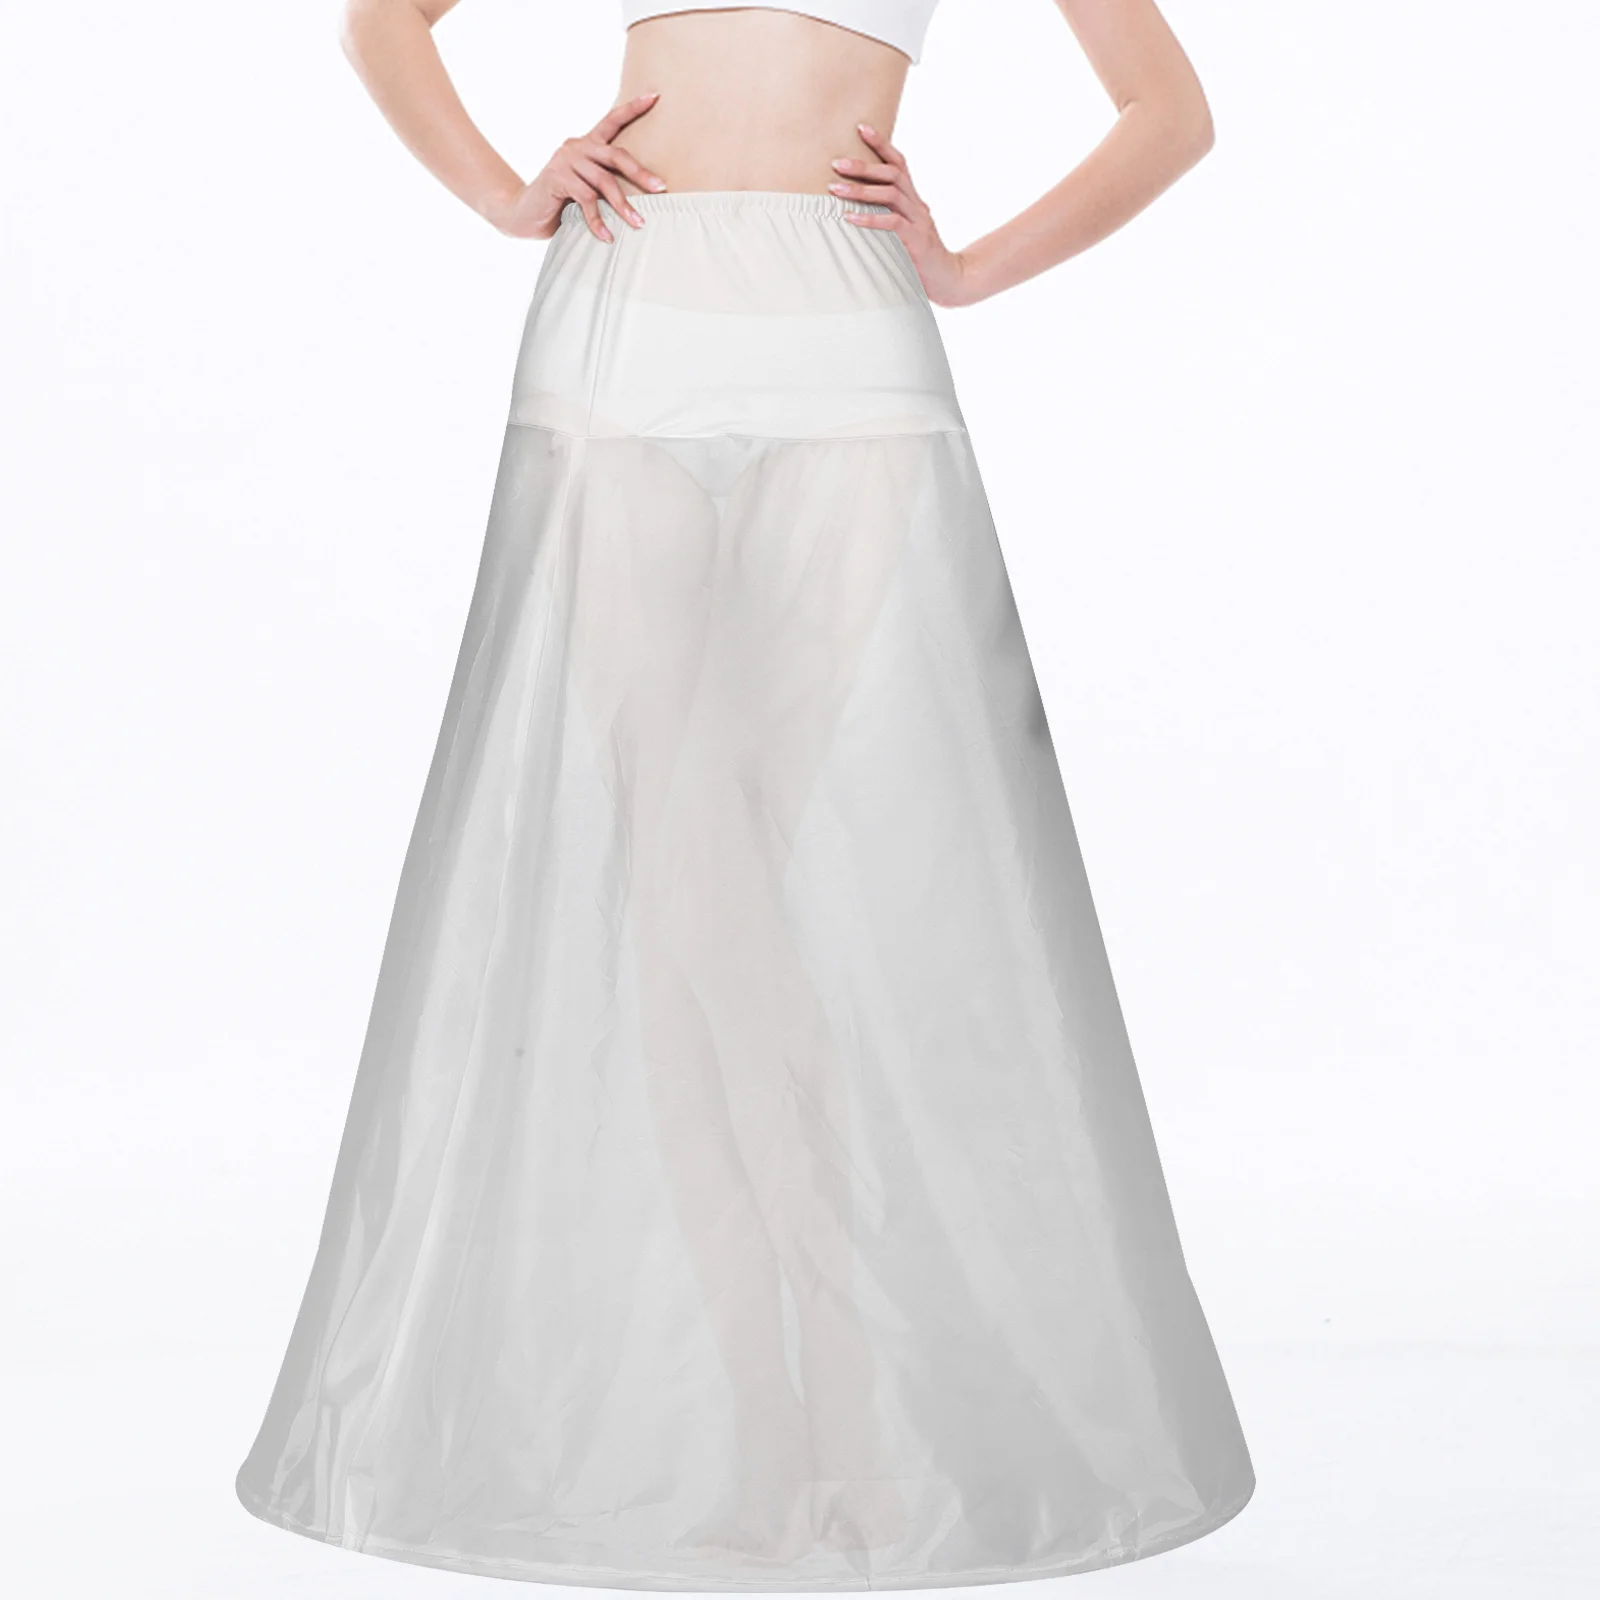 

A Line Skirt White Bridal Dress Wedding Petticoat Ruffles Elastic Fabric Underskirt Women's Crinoline Petticoats